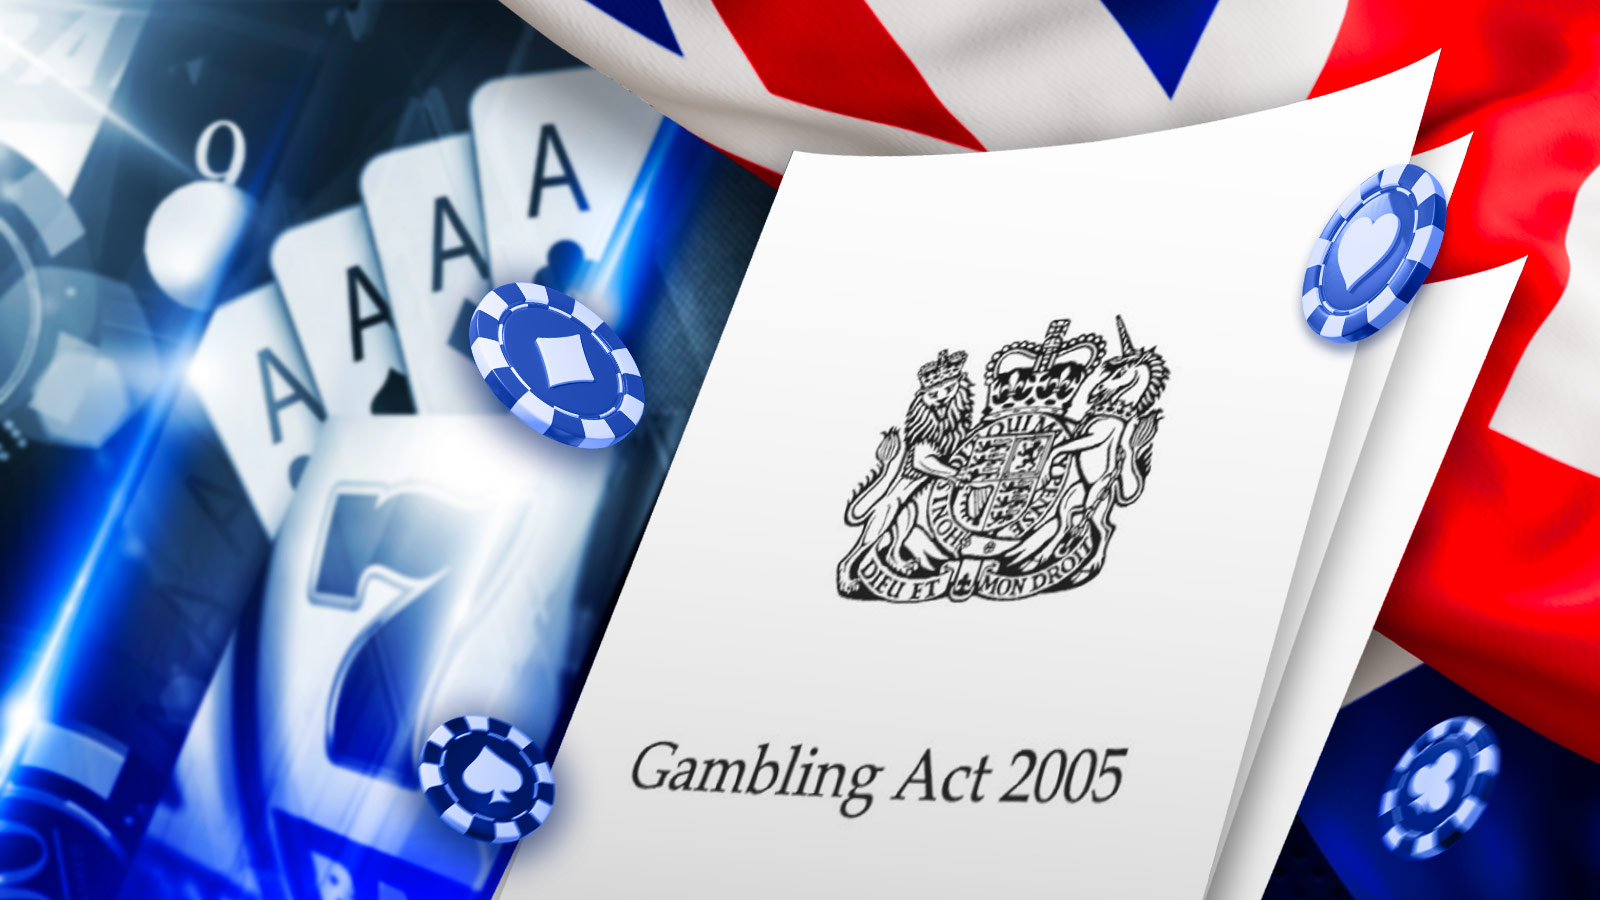 The UK's Gambling Act 2005 